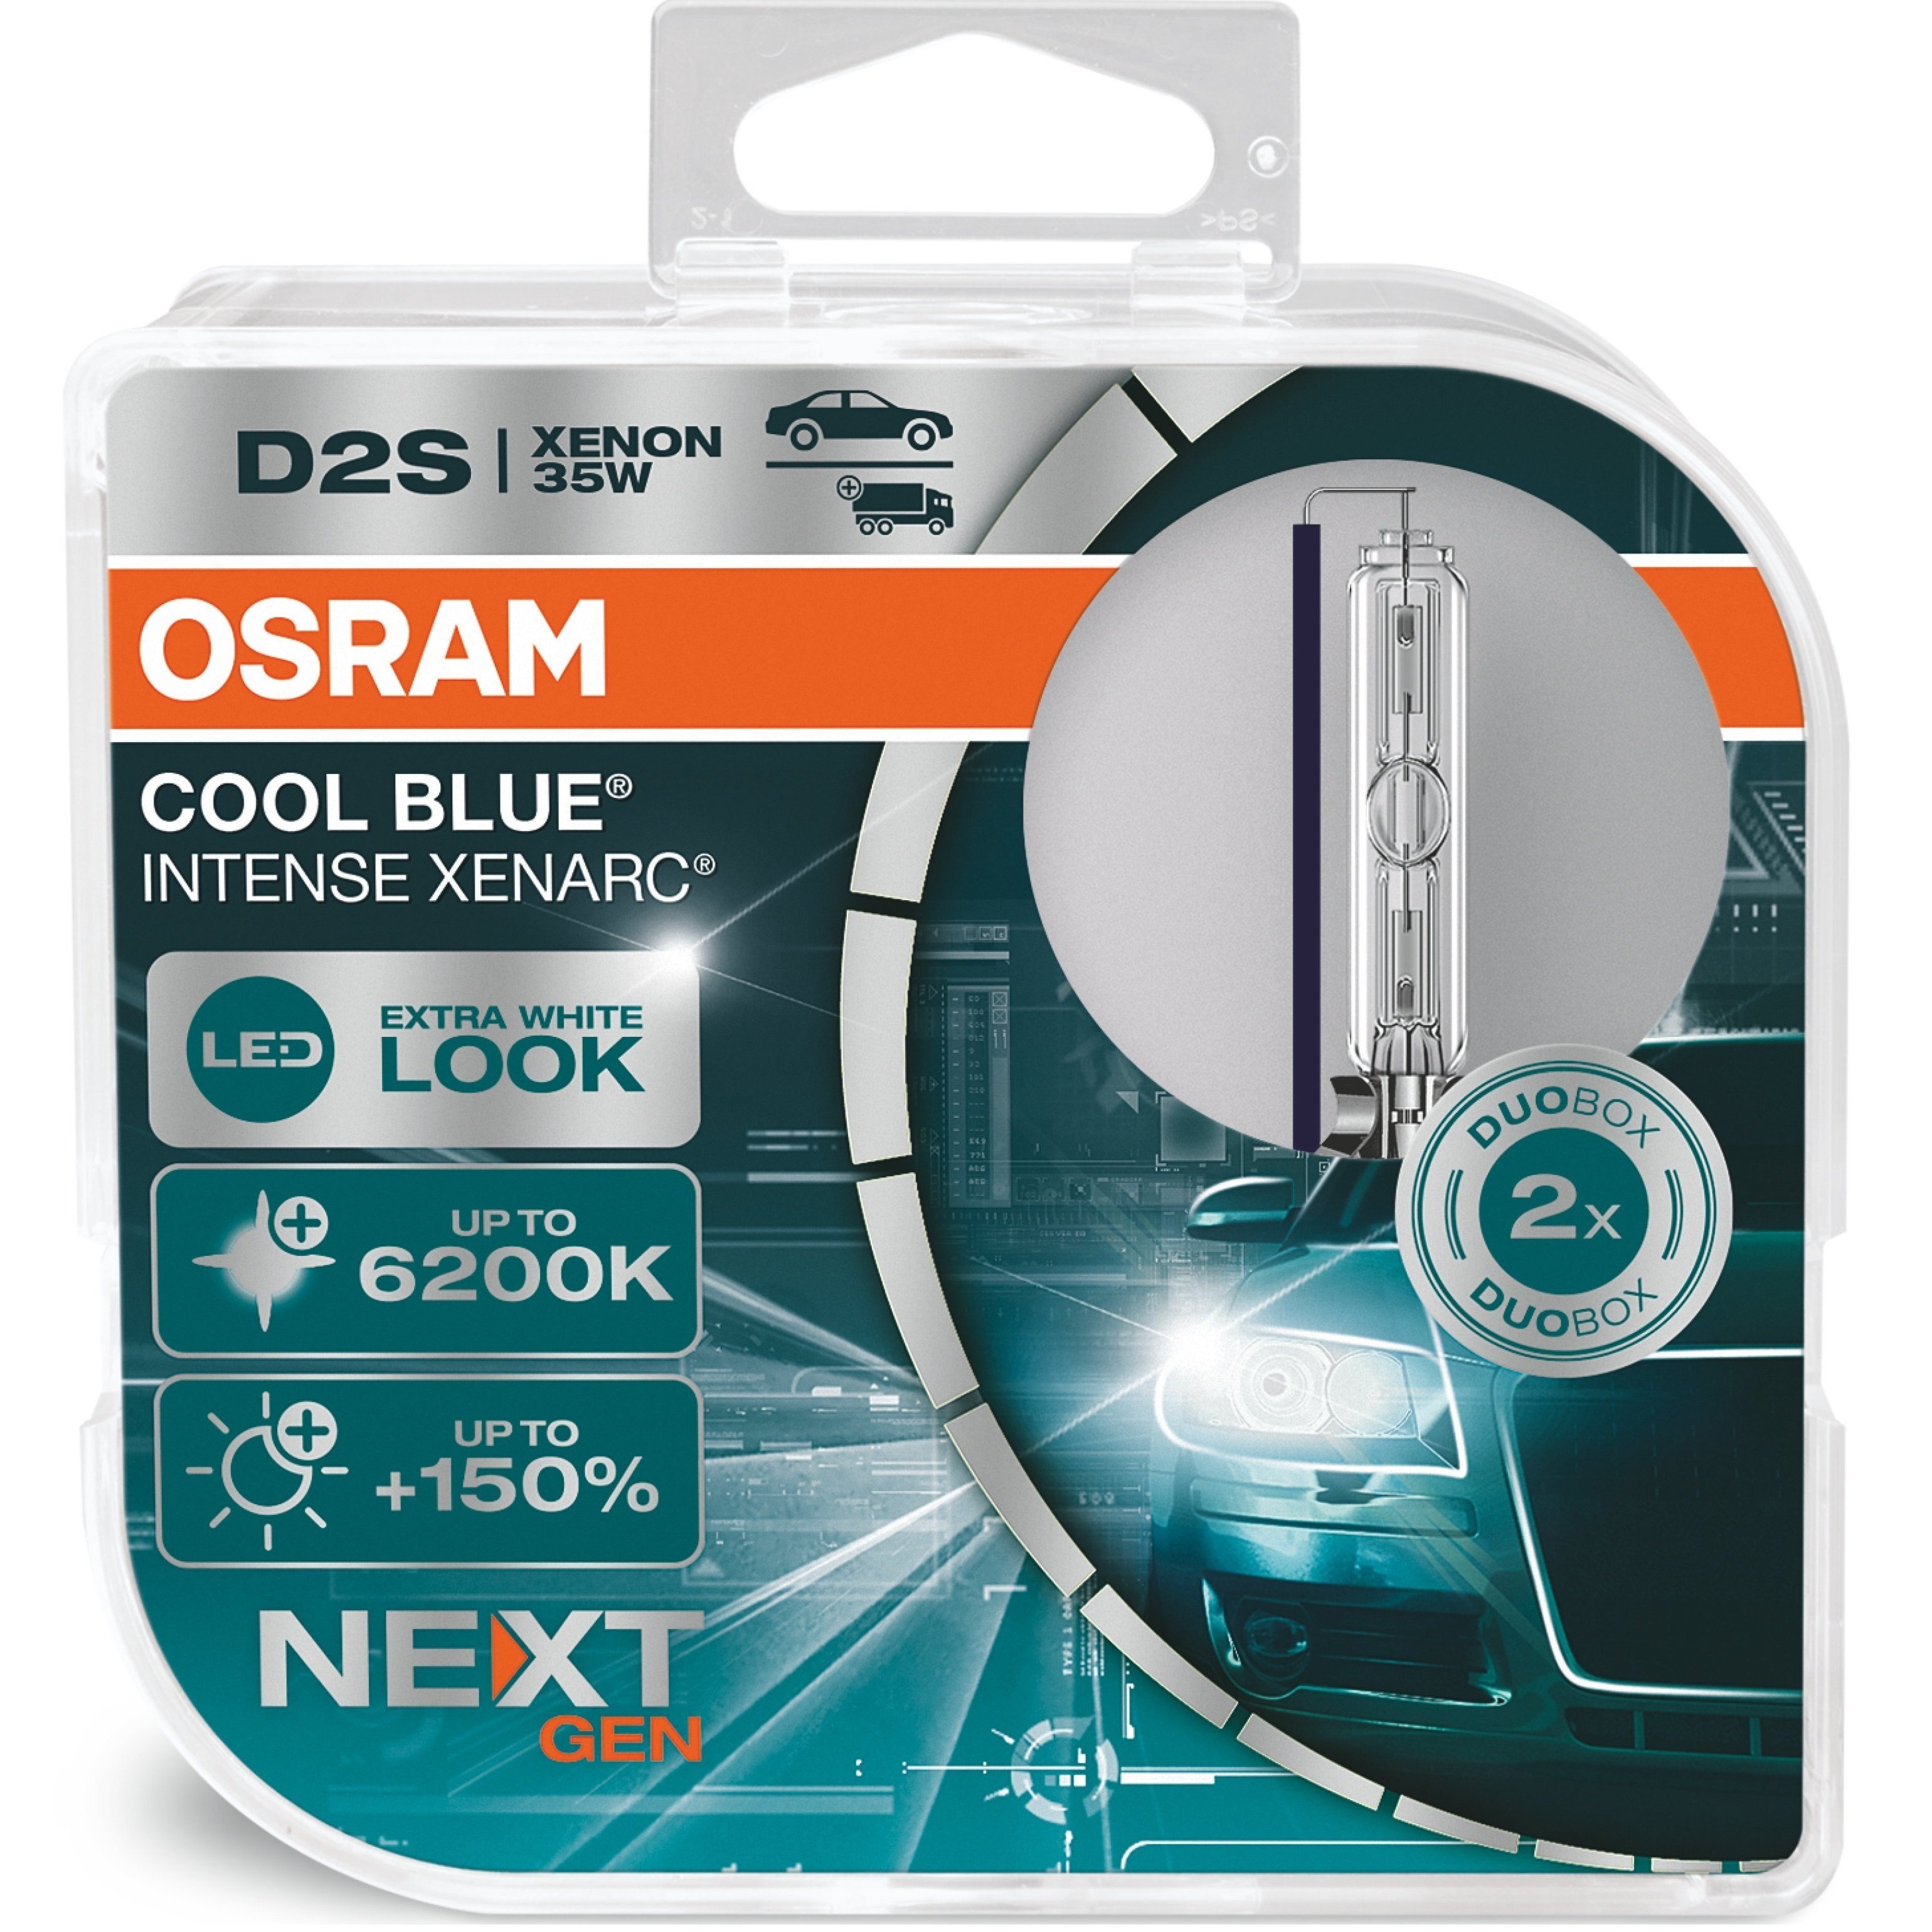 Лампа Osram ксеноновая 85V D2S 35W P32D-2 xenarc Cool Blue Intense, Duobox (2шт) (OS_66240_CBI-HCB) фото 1